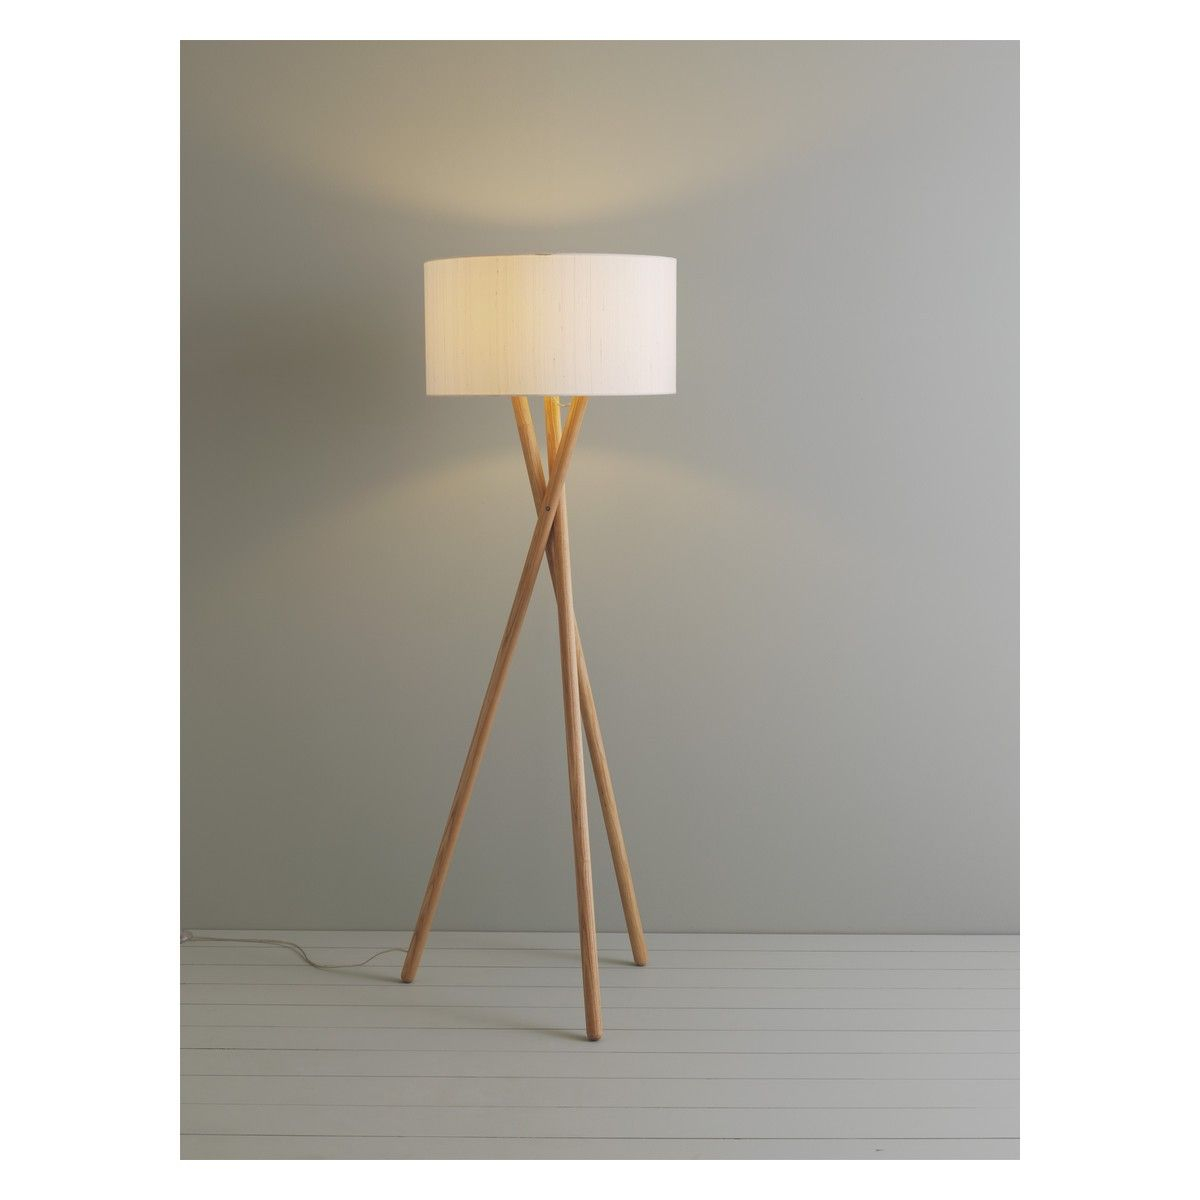 Lansbury Base Ash Wooden Tripod Floor Lamp Wooden Tripod regarding size 1200 X 1200